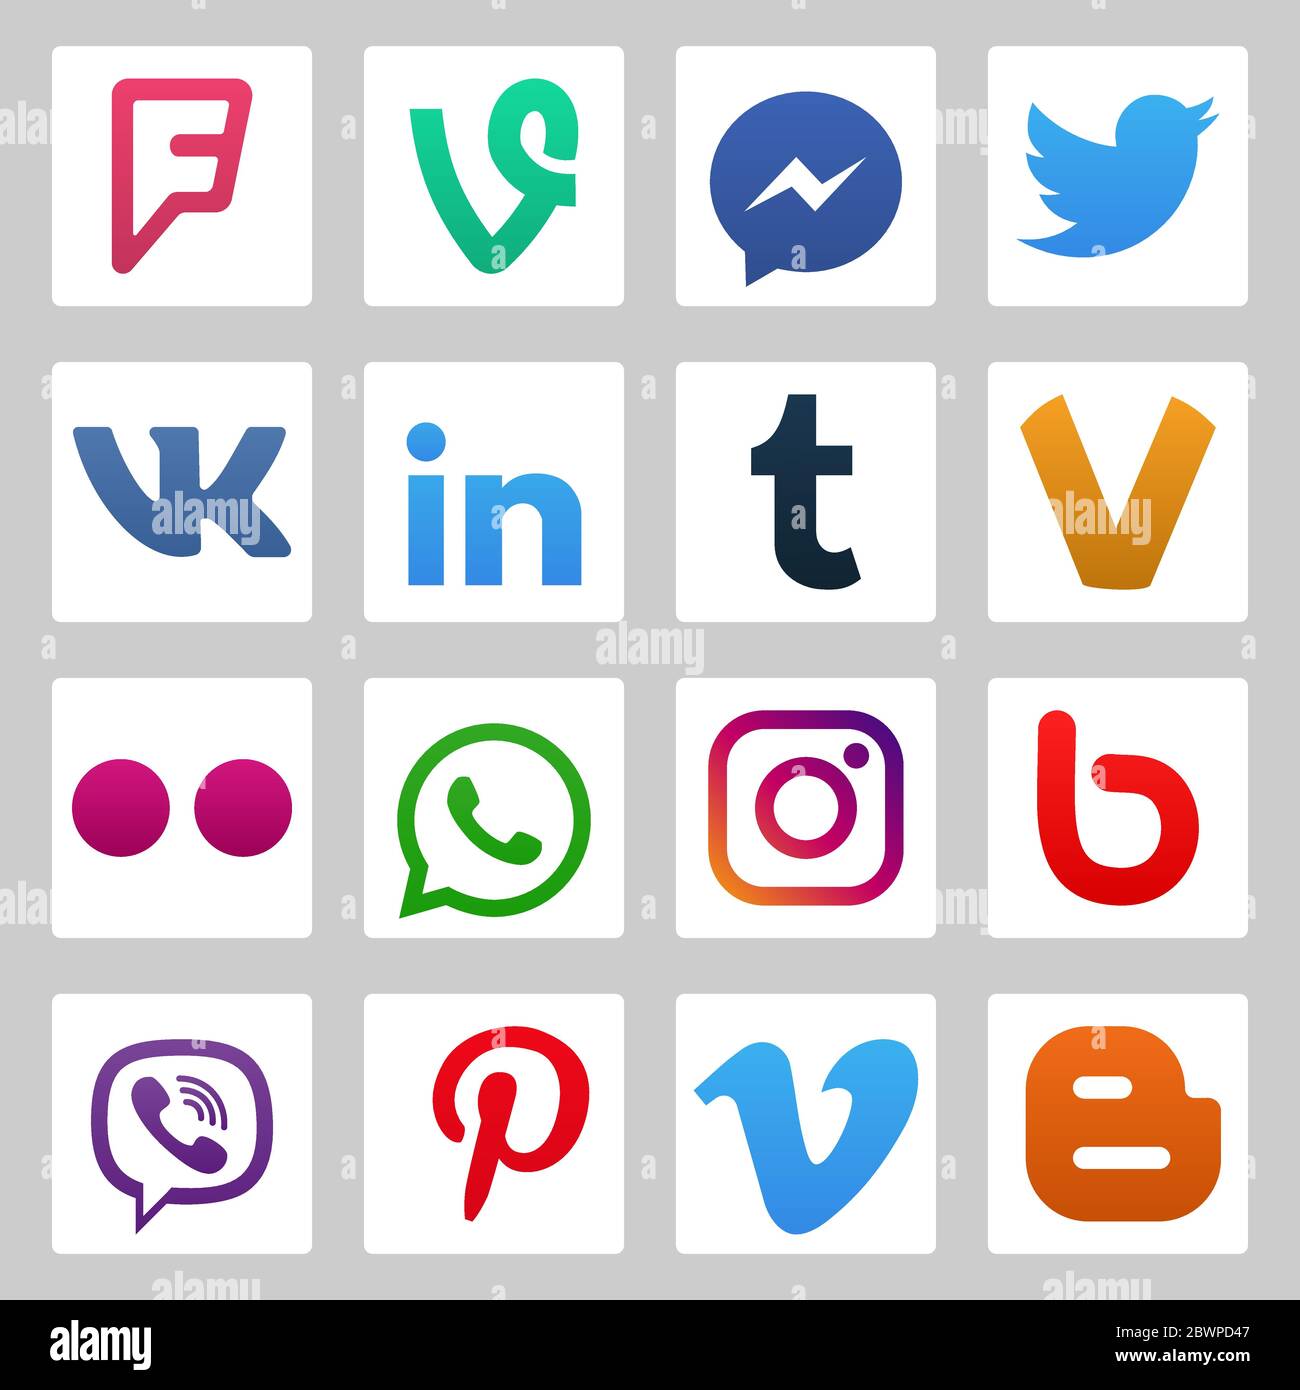 VORONEZH, RUSSIA - JANUARY 05, 2020: Set of color popular social media icons: youtube, instagram, twitter, facebook, whatsapp, pinterest, snapchat, vi Stock Vector